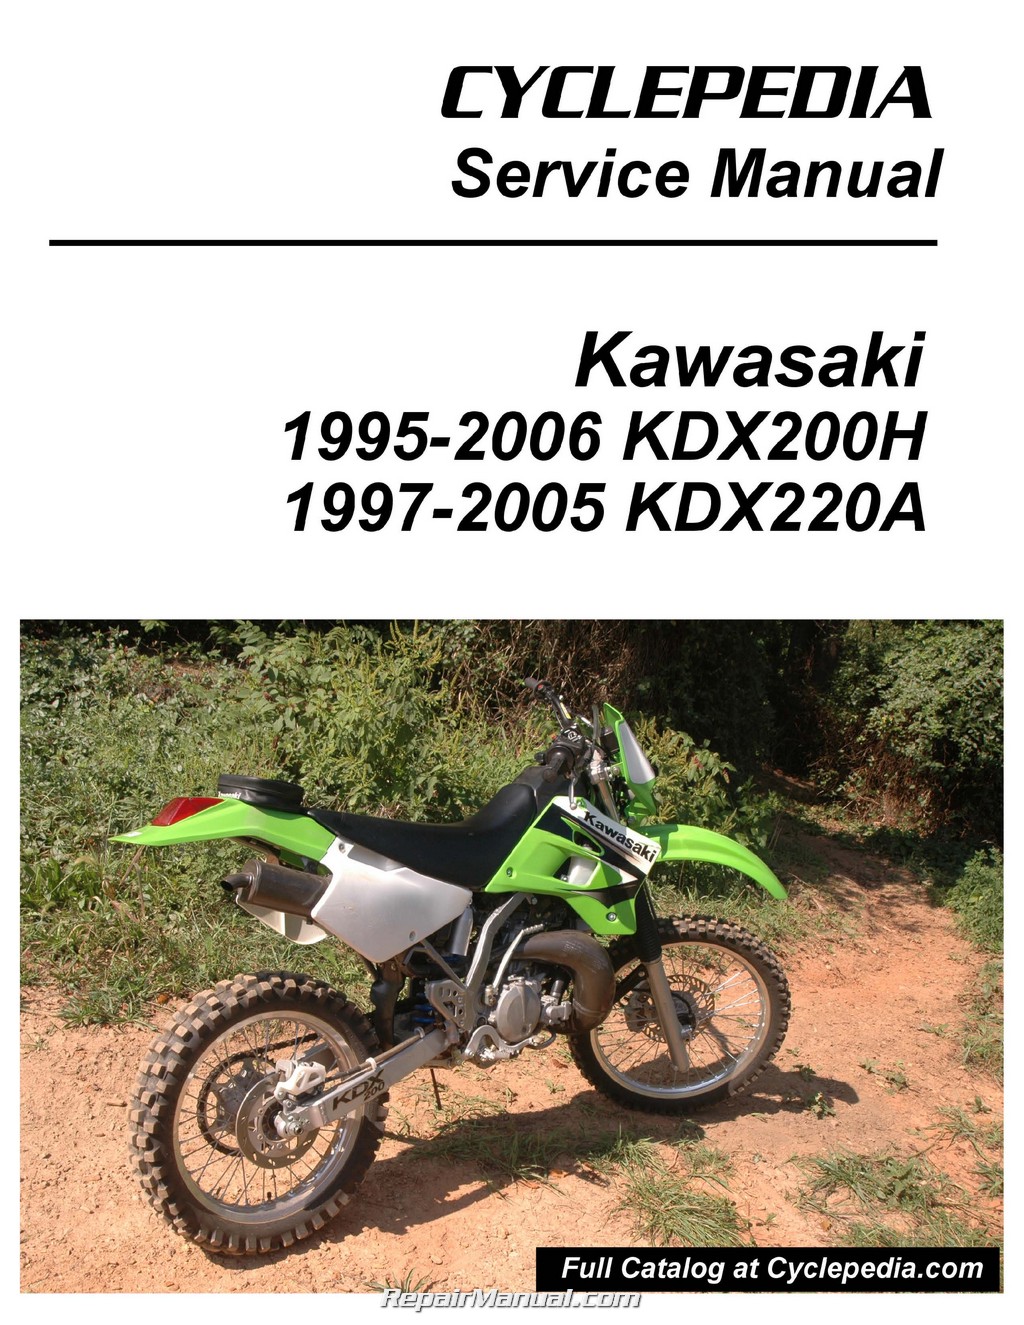 Kdx220r Service Manual